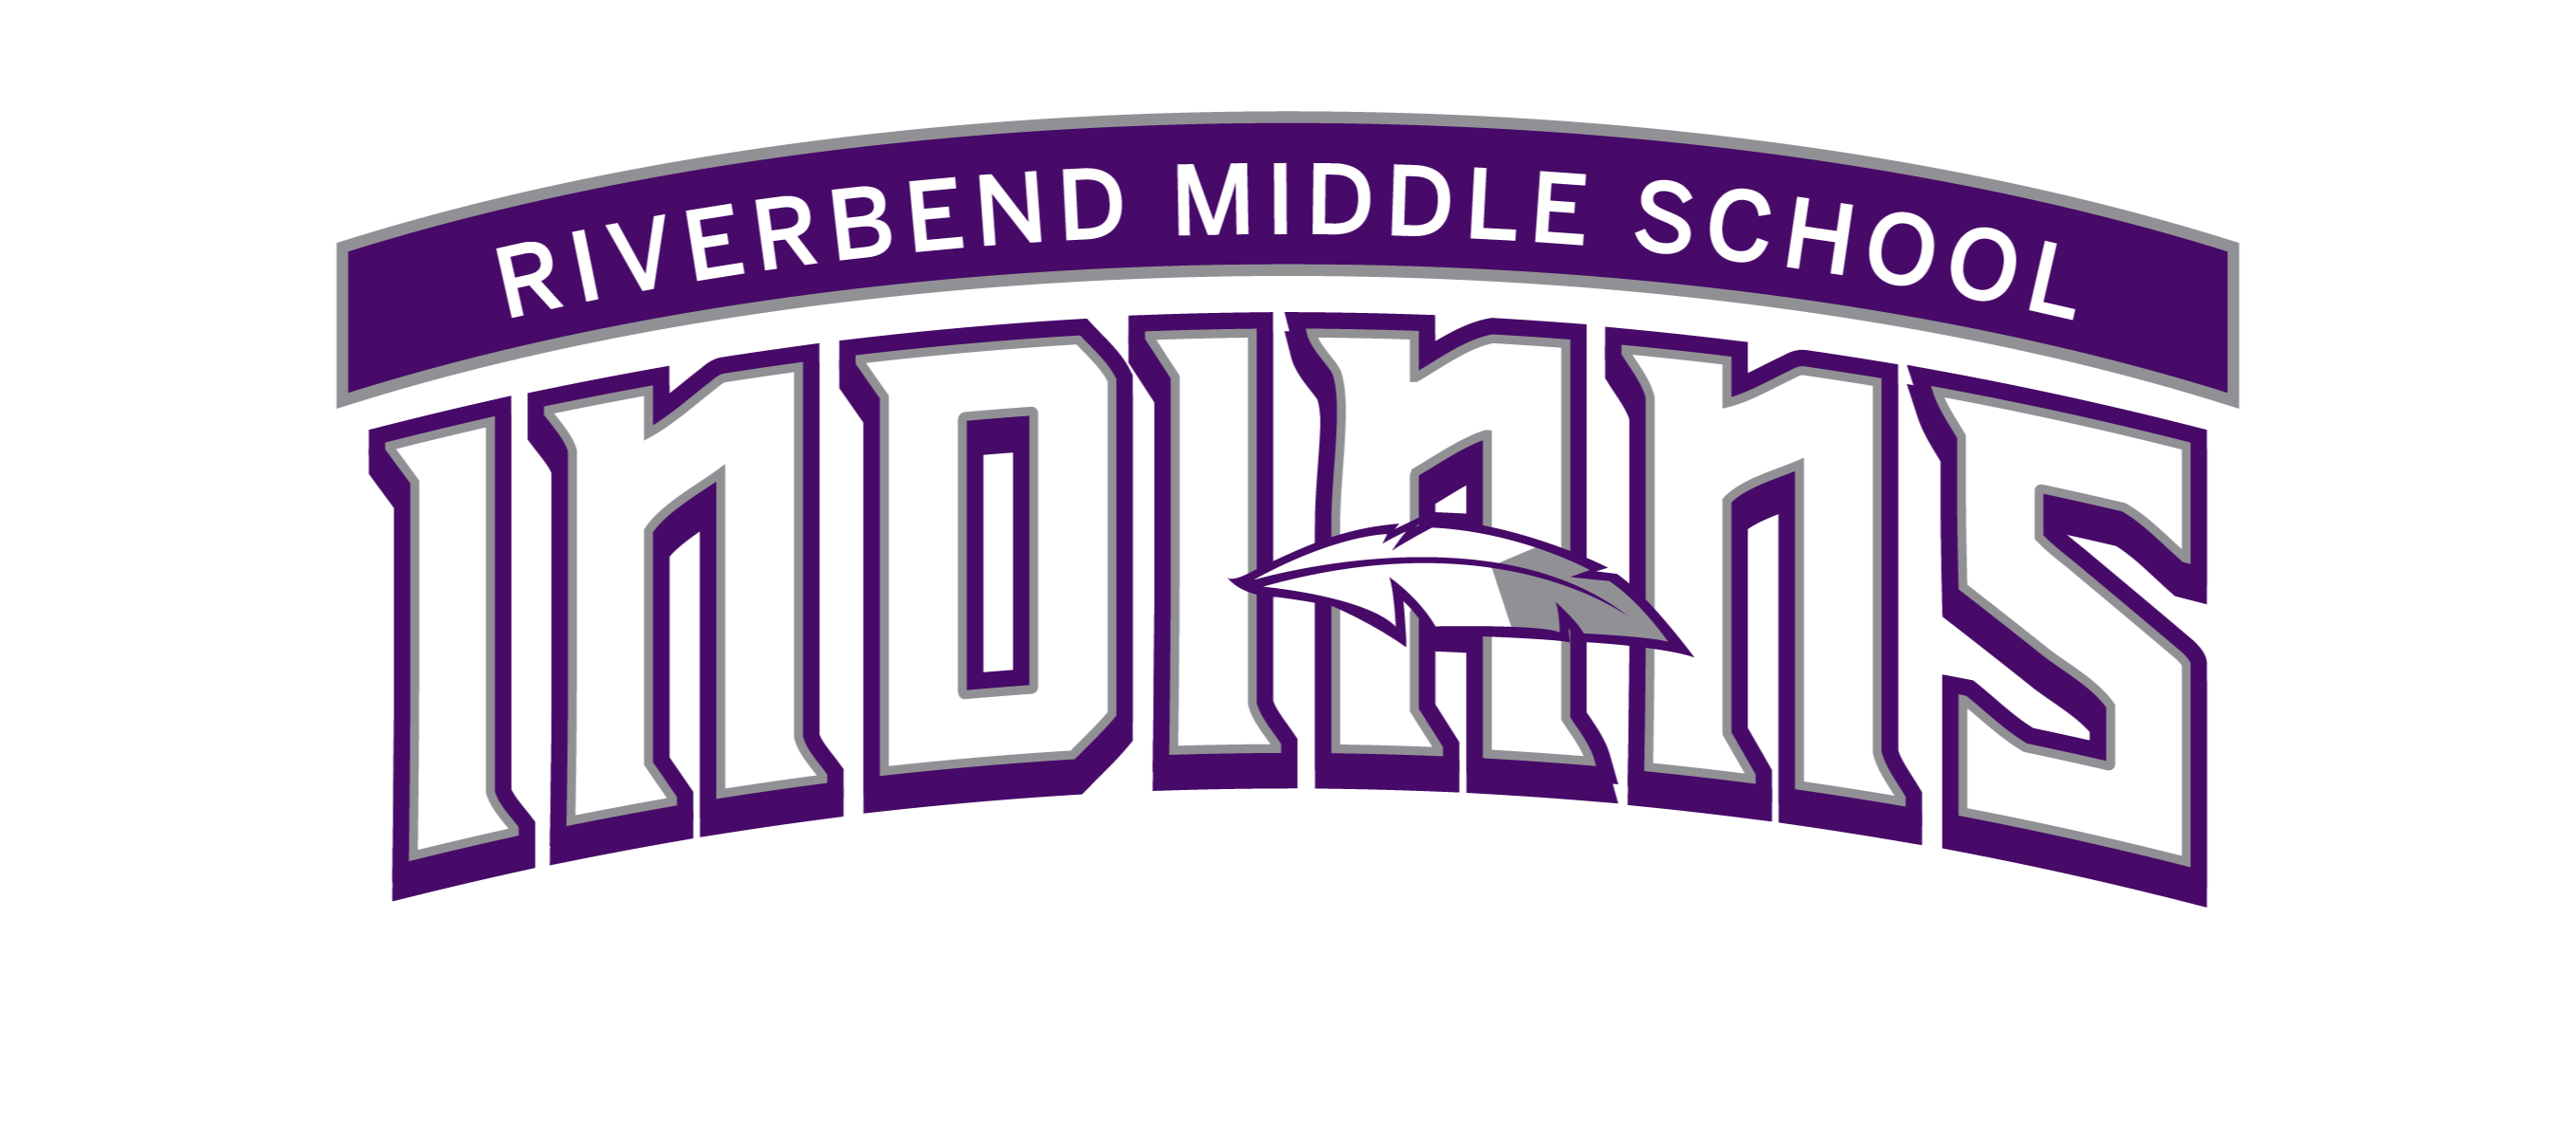 Riverbend Middle School